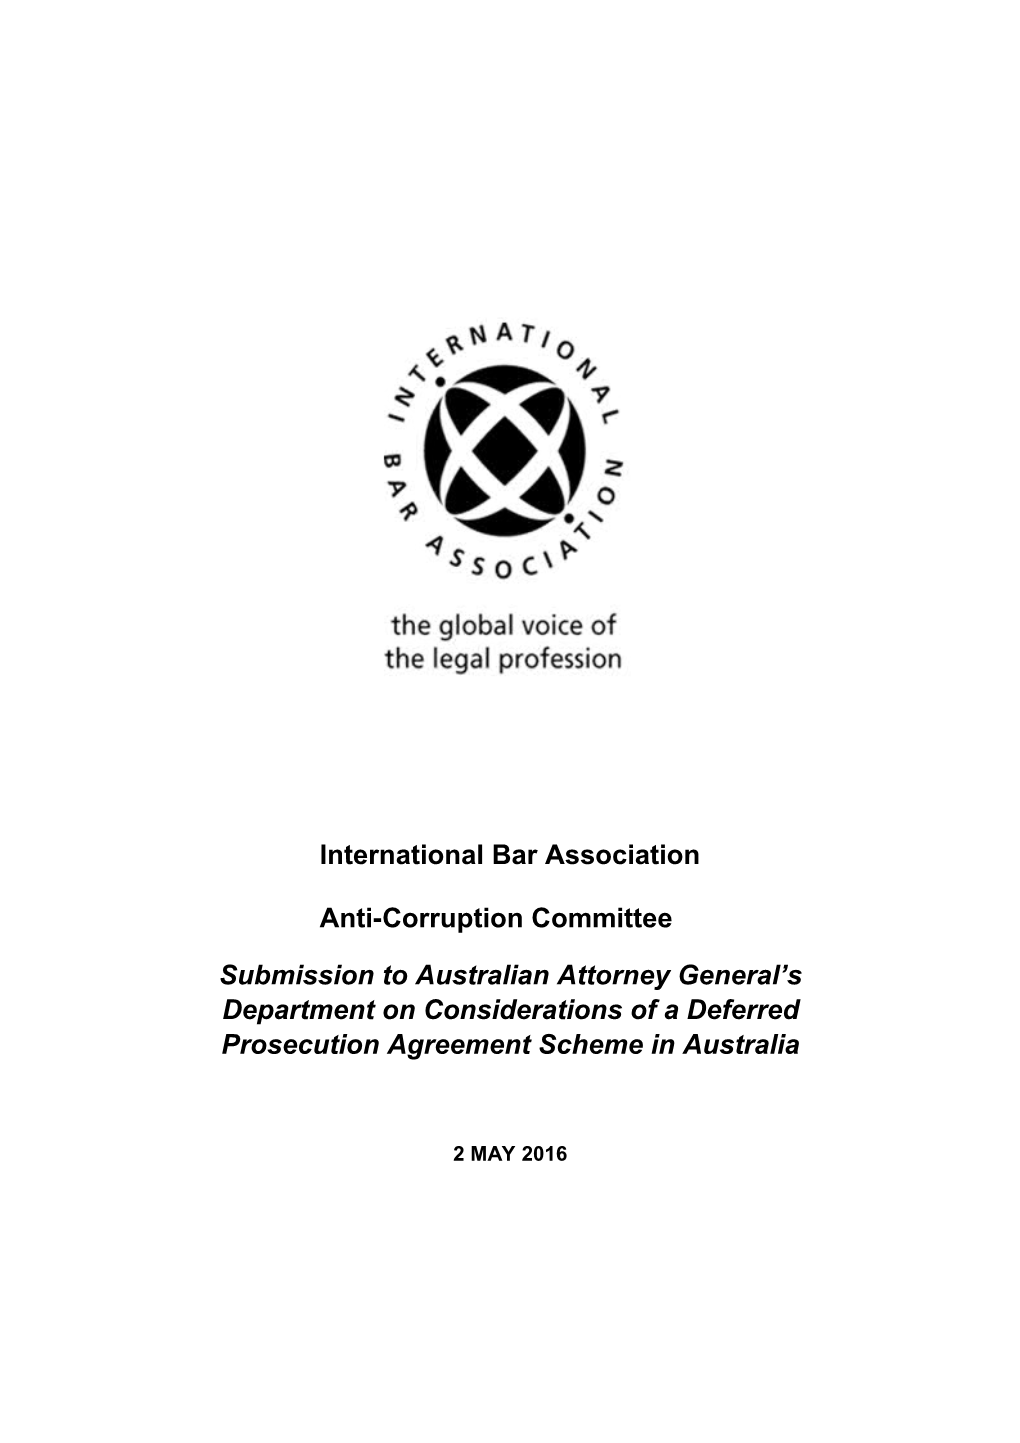 International Bar Association - Submission